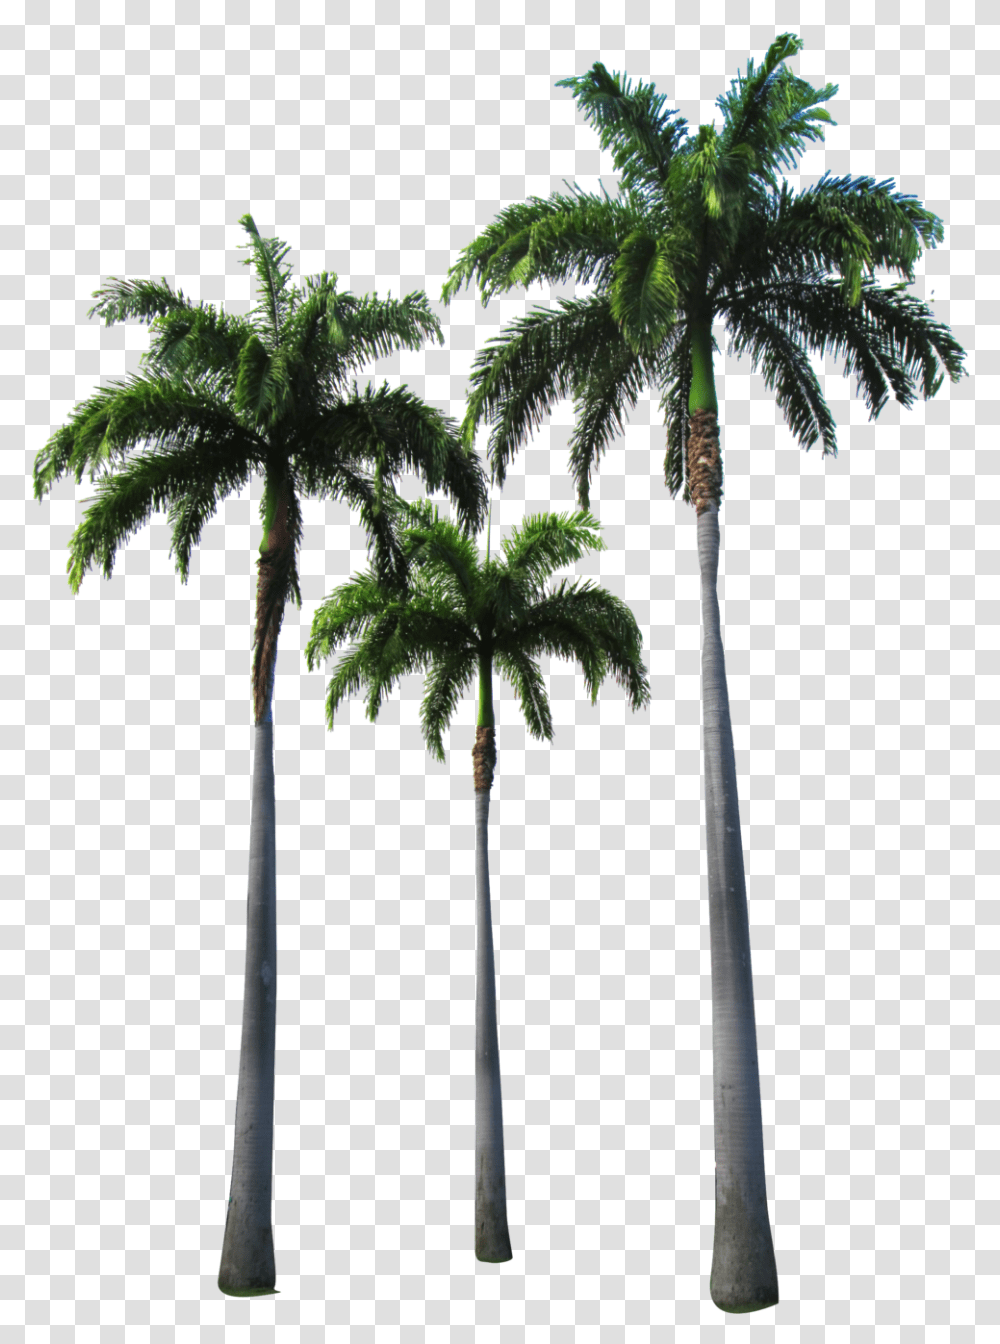 Arecaceae Tree Clip Art Hotline Miami Wallpaper Phone, Plant, Palm Tree, Lamp Post Transparent Png